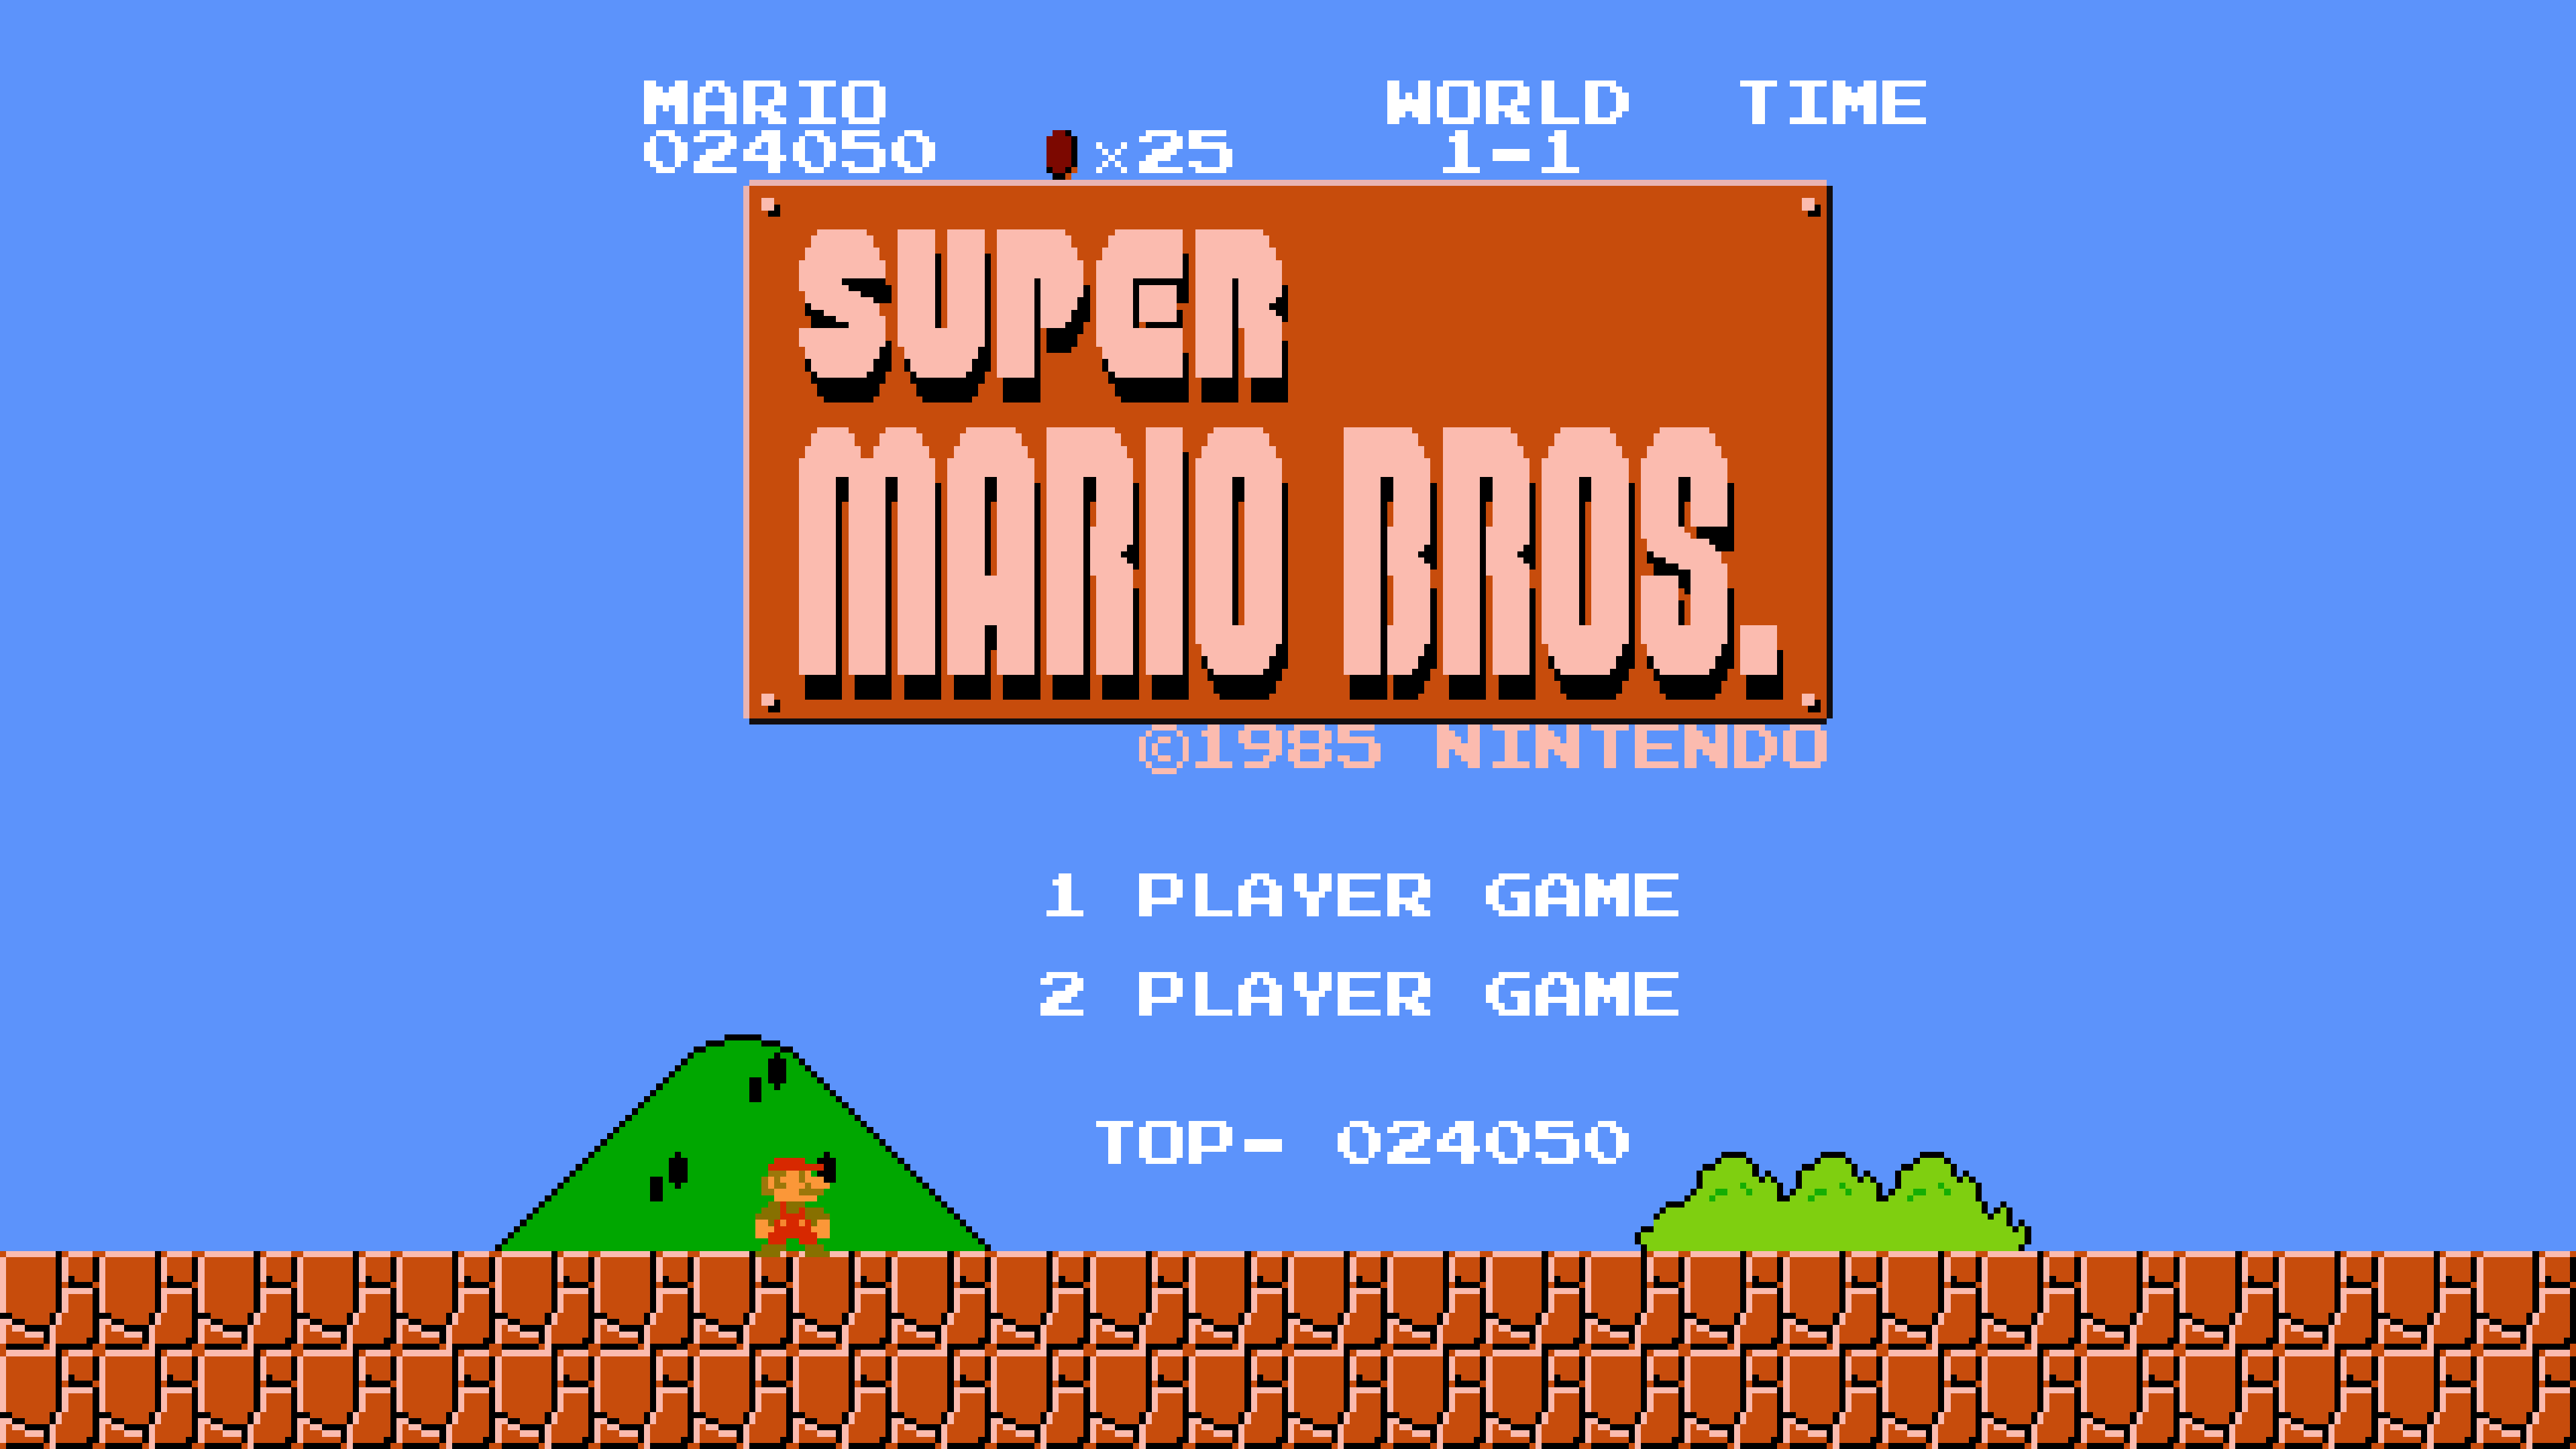 General 3840x2160 8-bit retro games video games Mario numbers 1985 (Year) Mario Bros. Nintendo Entertainment System